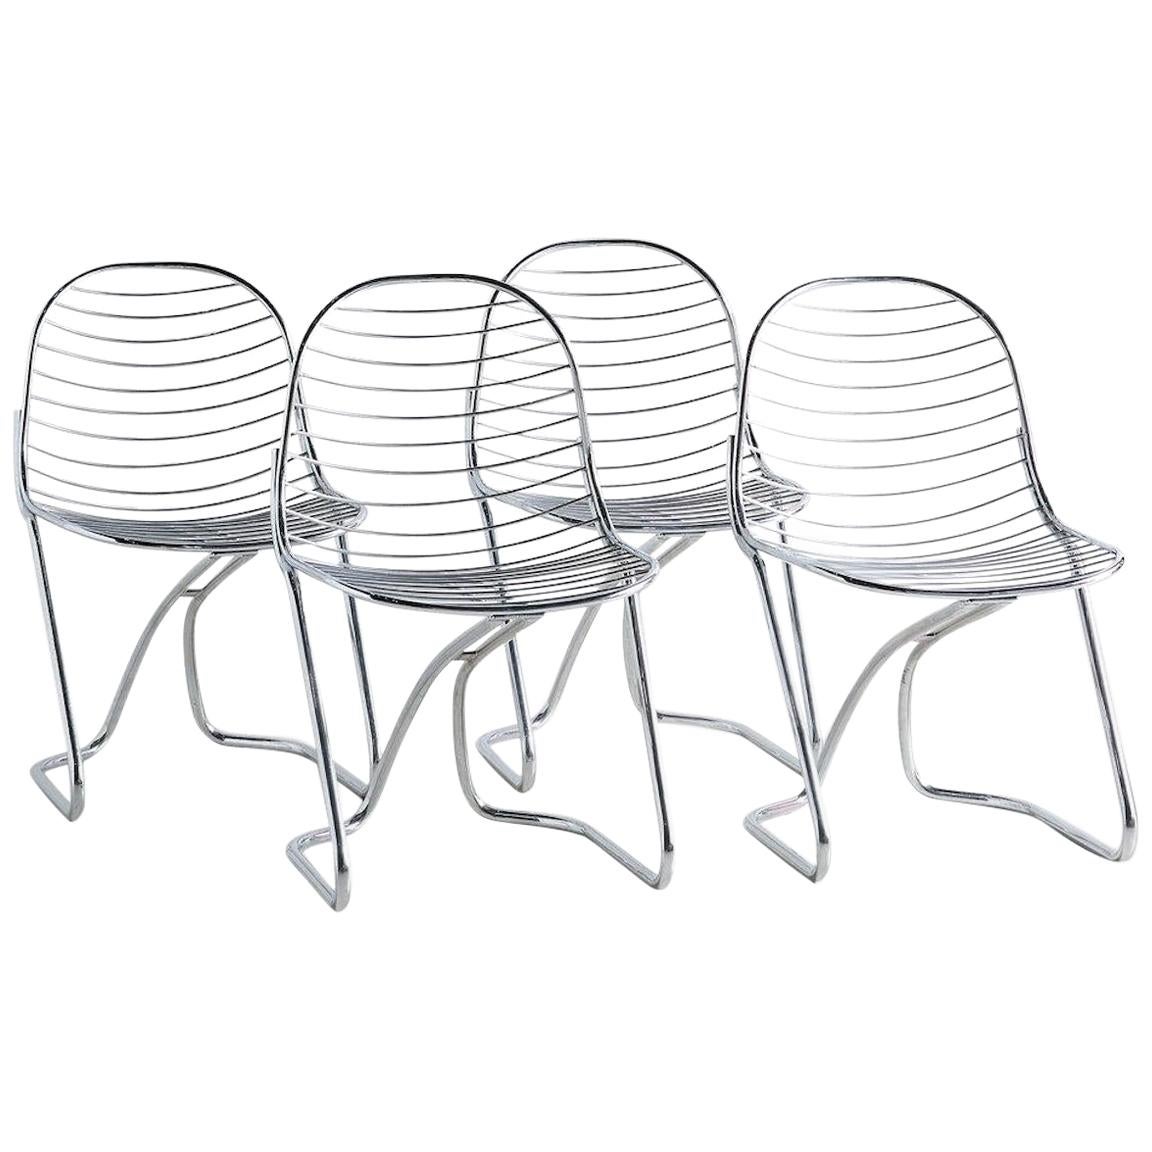 Gastone Rinaldi for RIMA Chrome Dining Chairs, Set of 4